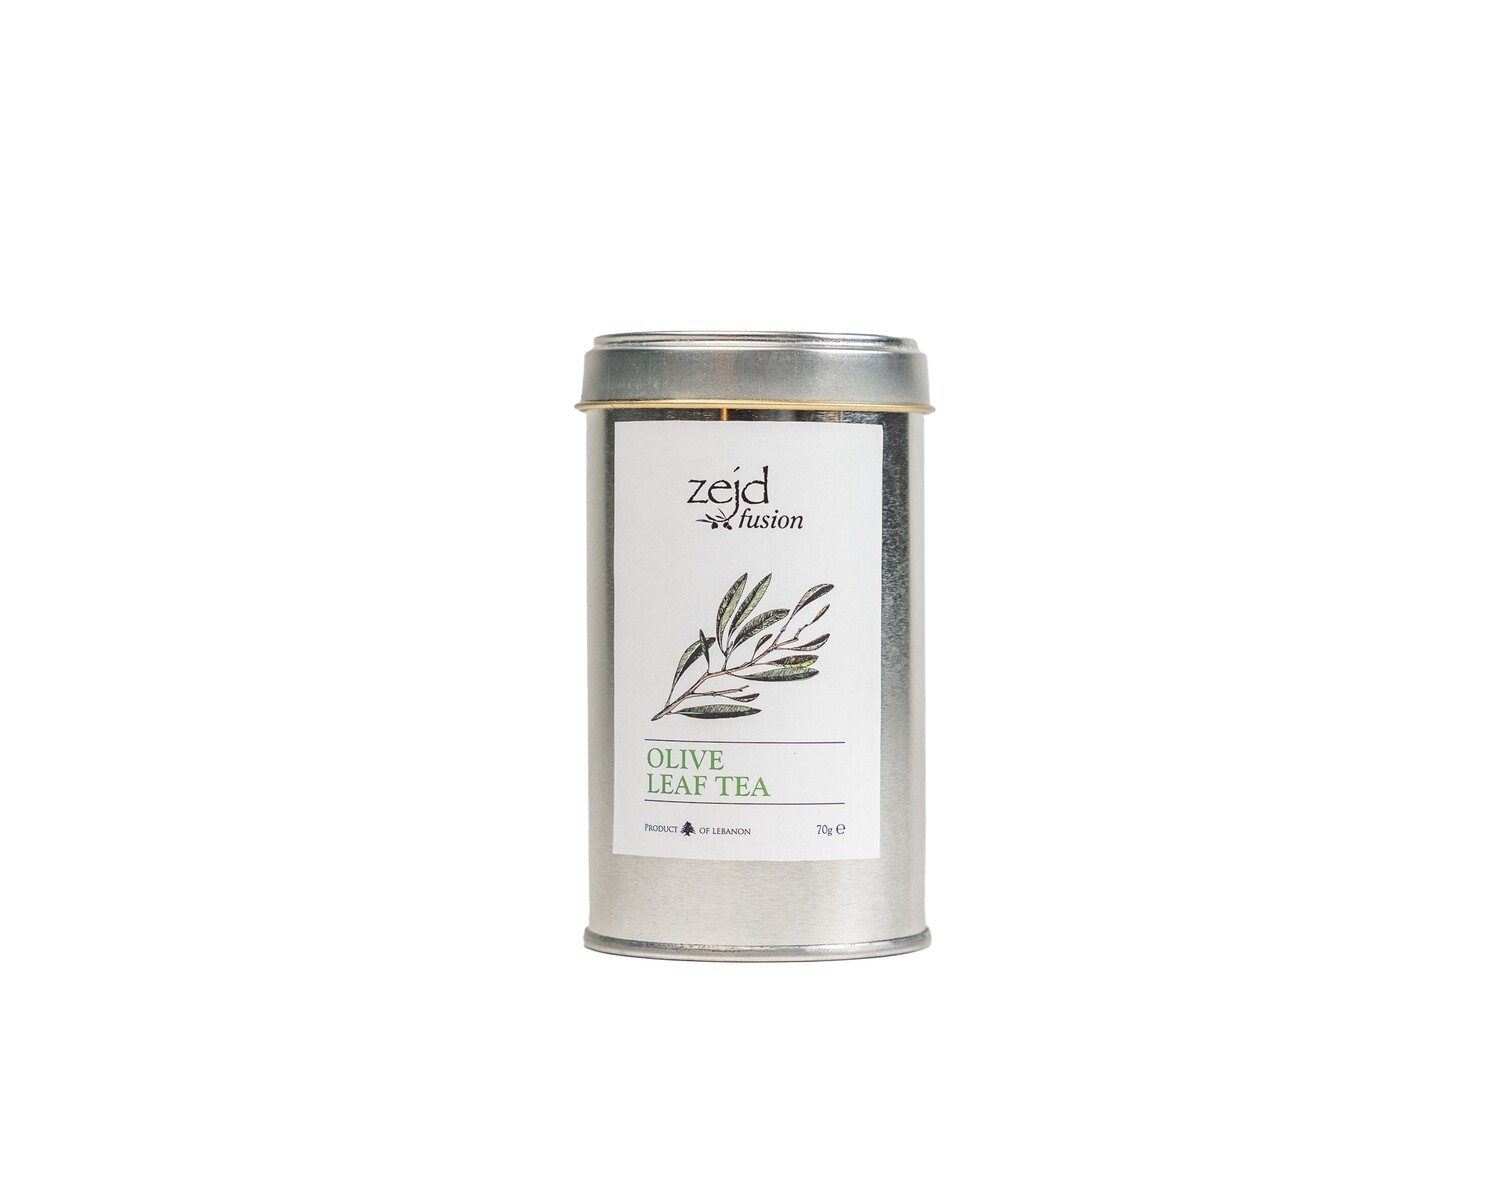 Zejd Olive Leaf Tea